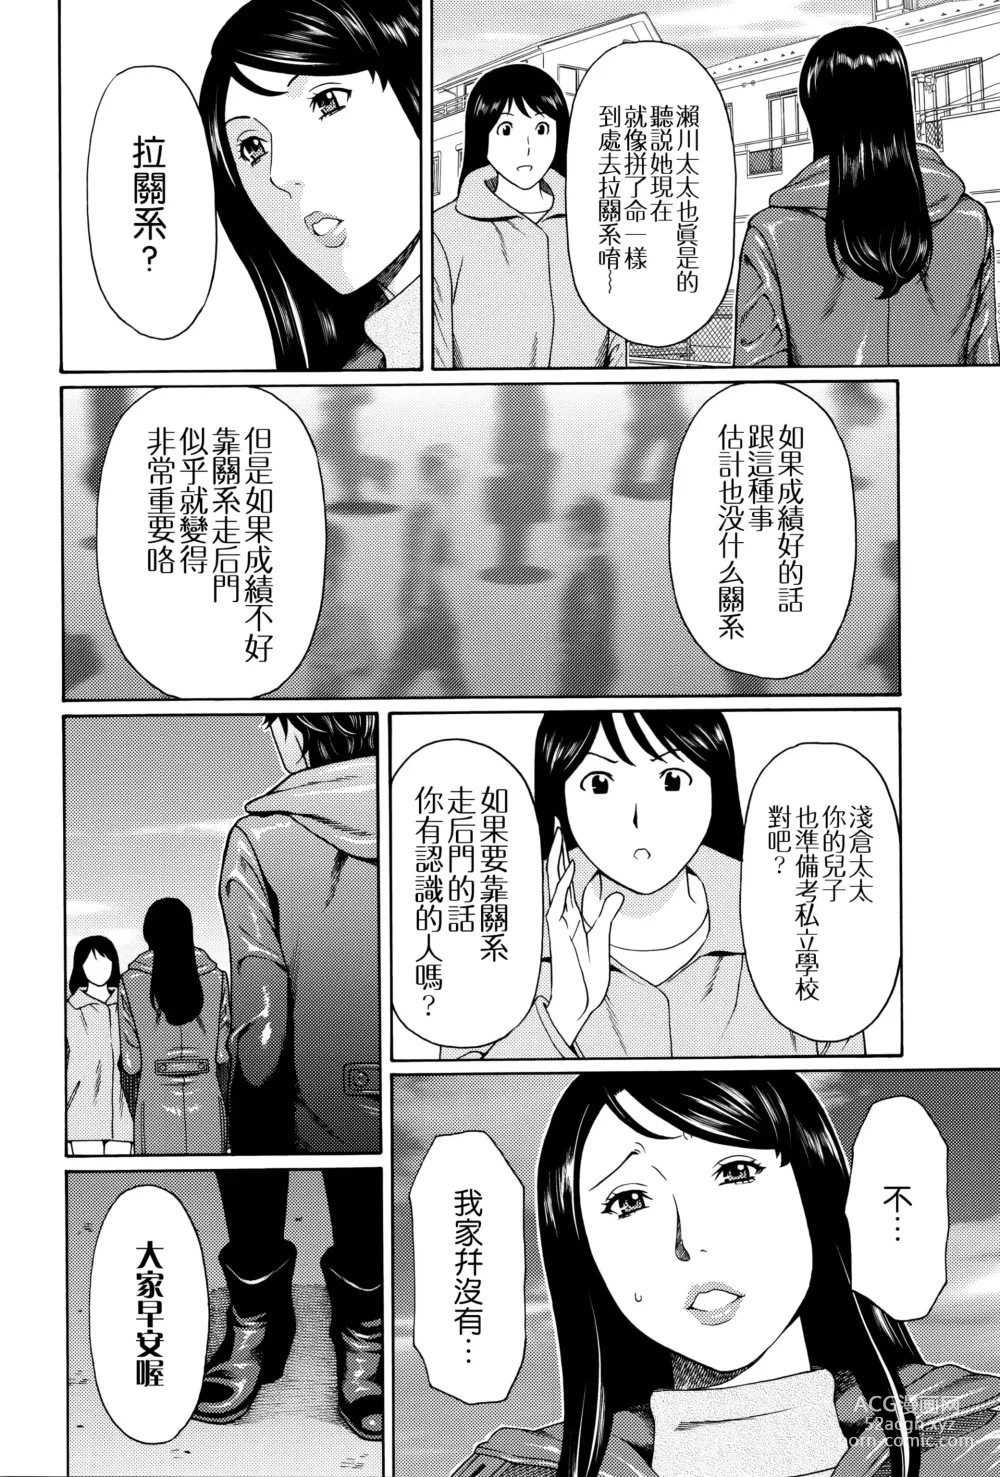 Page 7 of manga Mumyou no Uzu